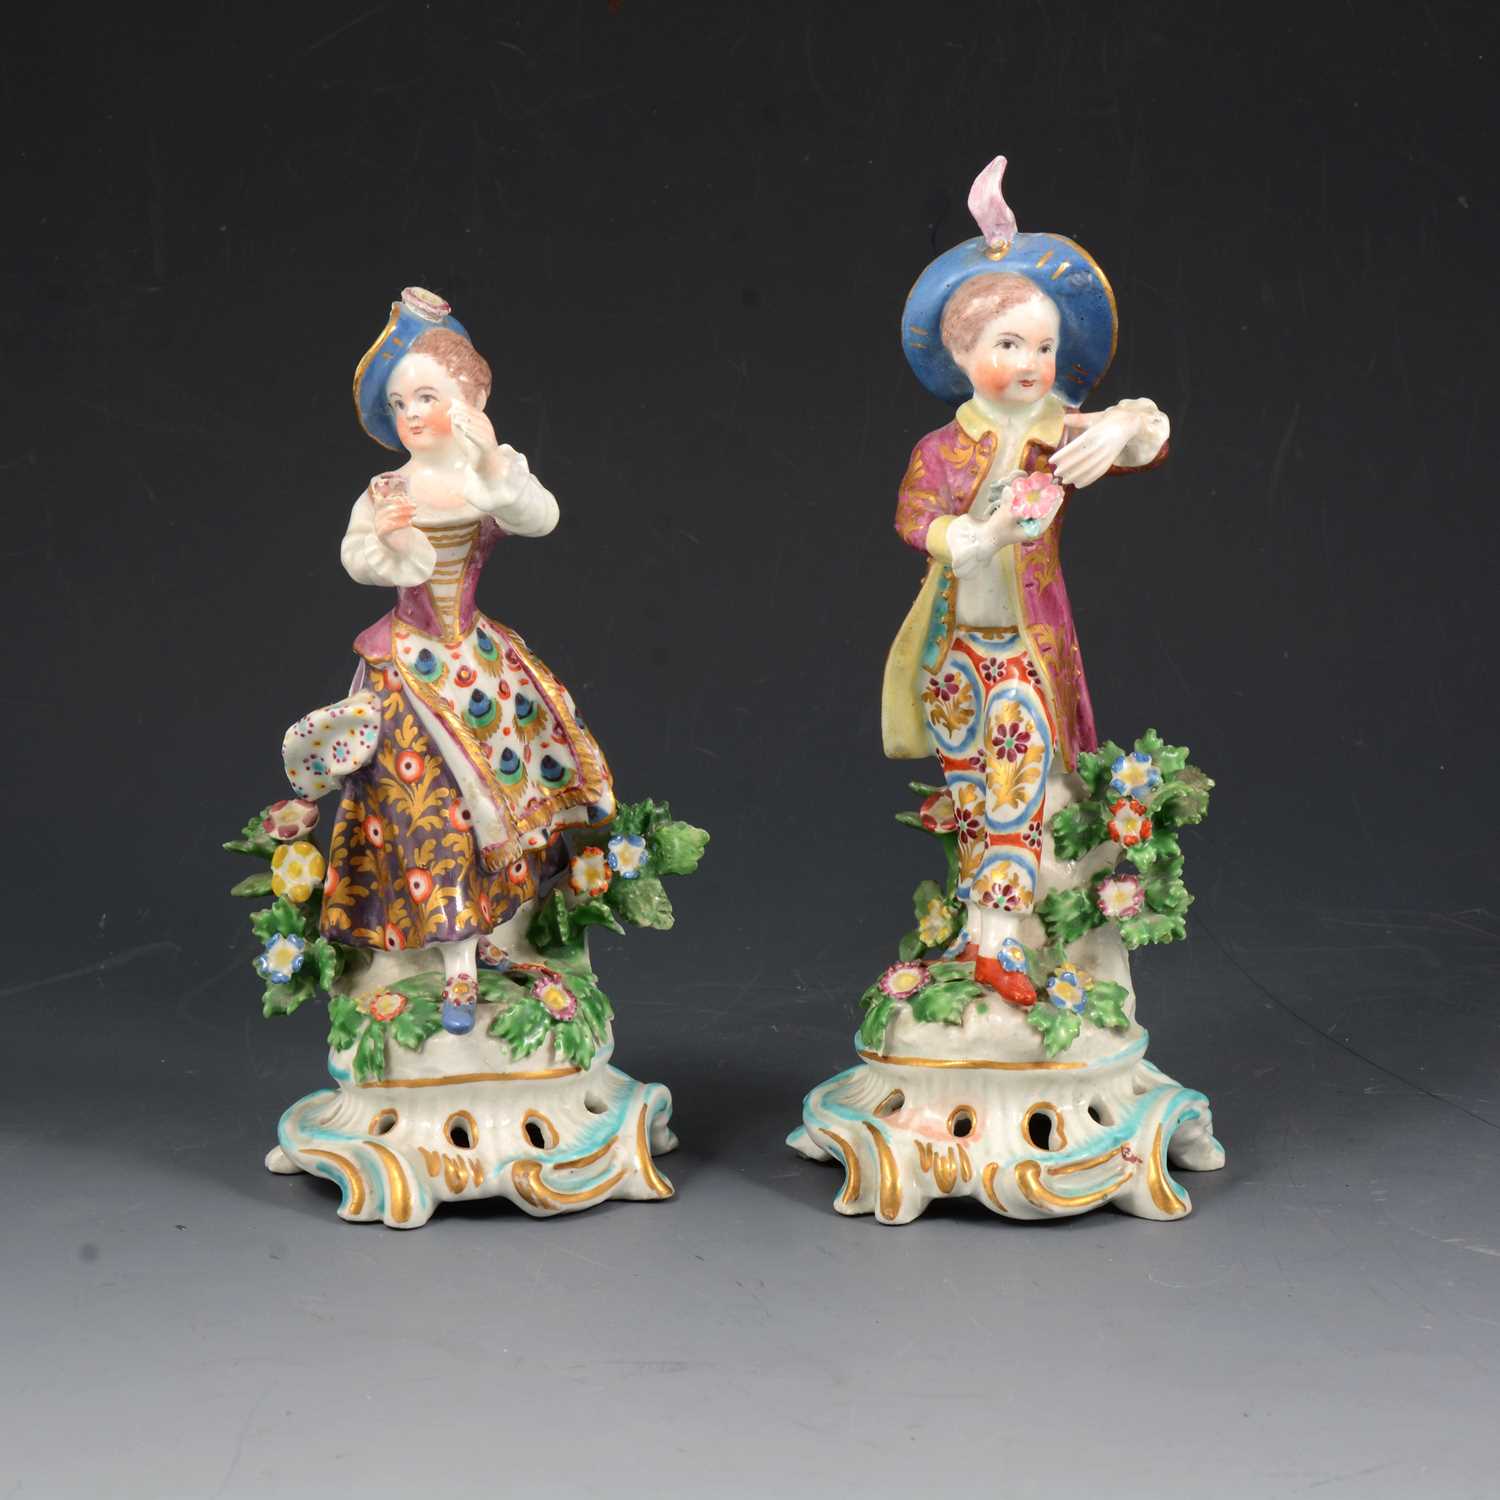 Lot 5 - Pair of Bow porcelain New Dancers figures